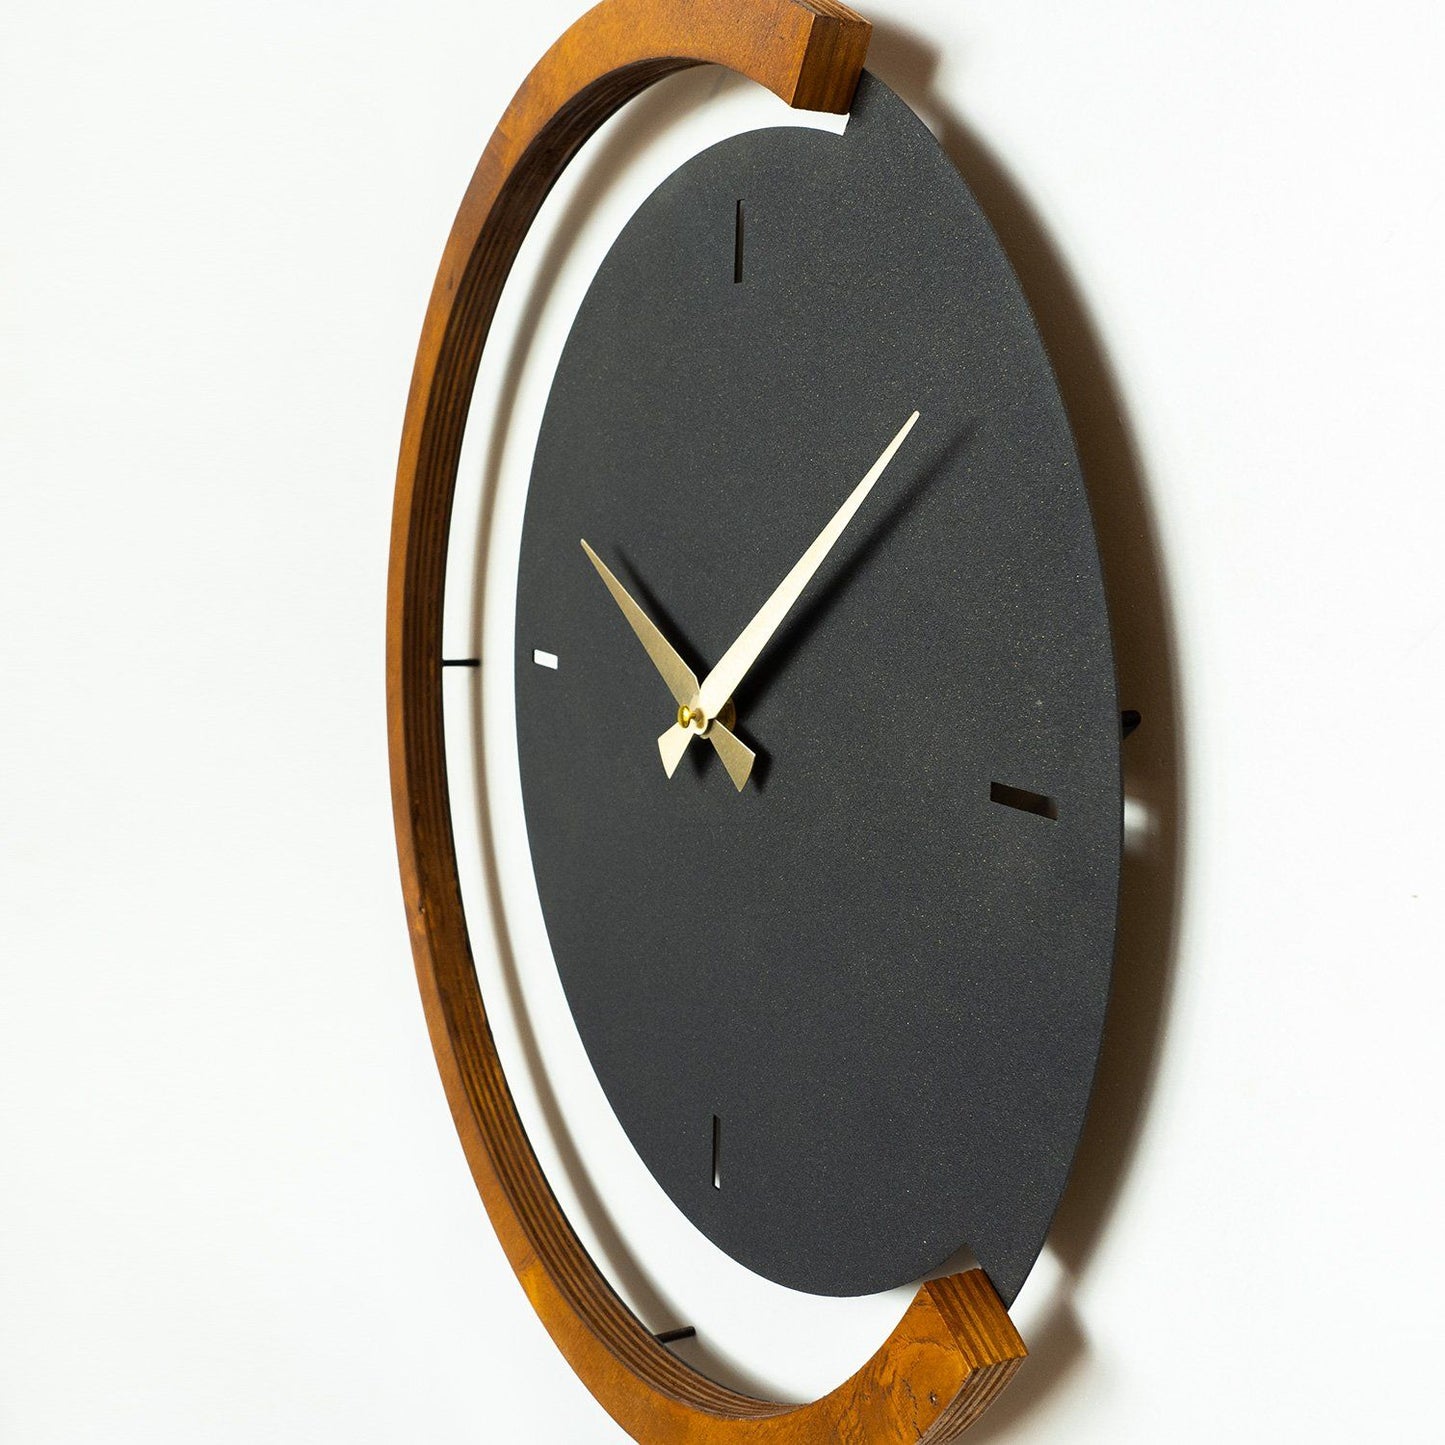 Moon Time Wooden Metal Wall Clock - APS117 - Decorative Metal Wall Clock